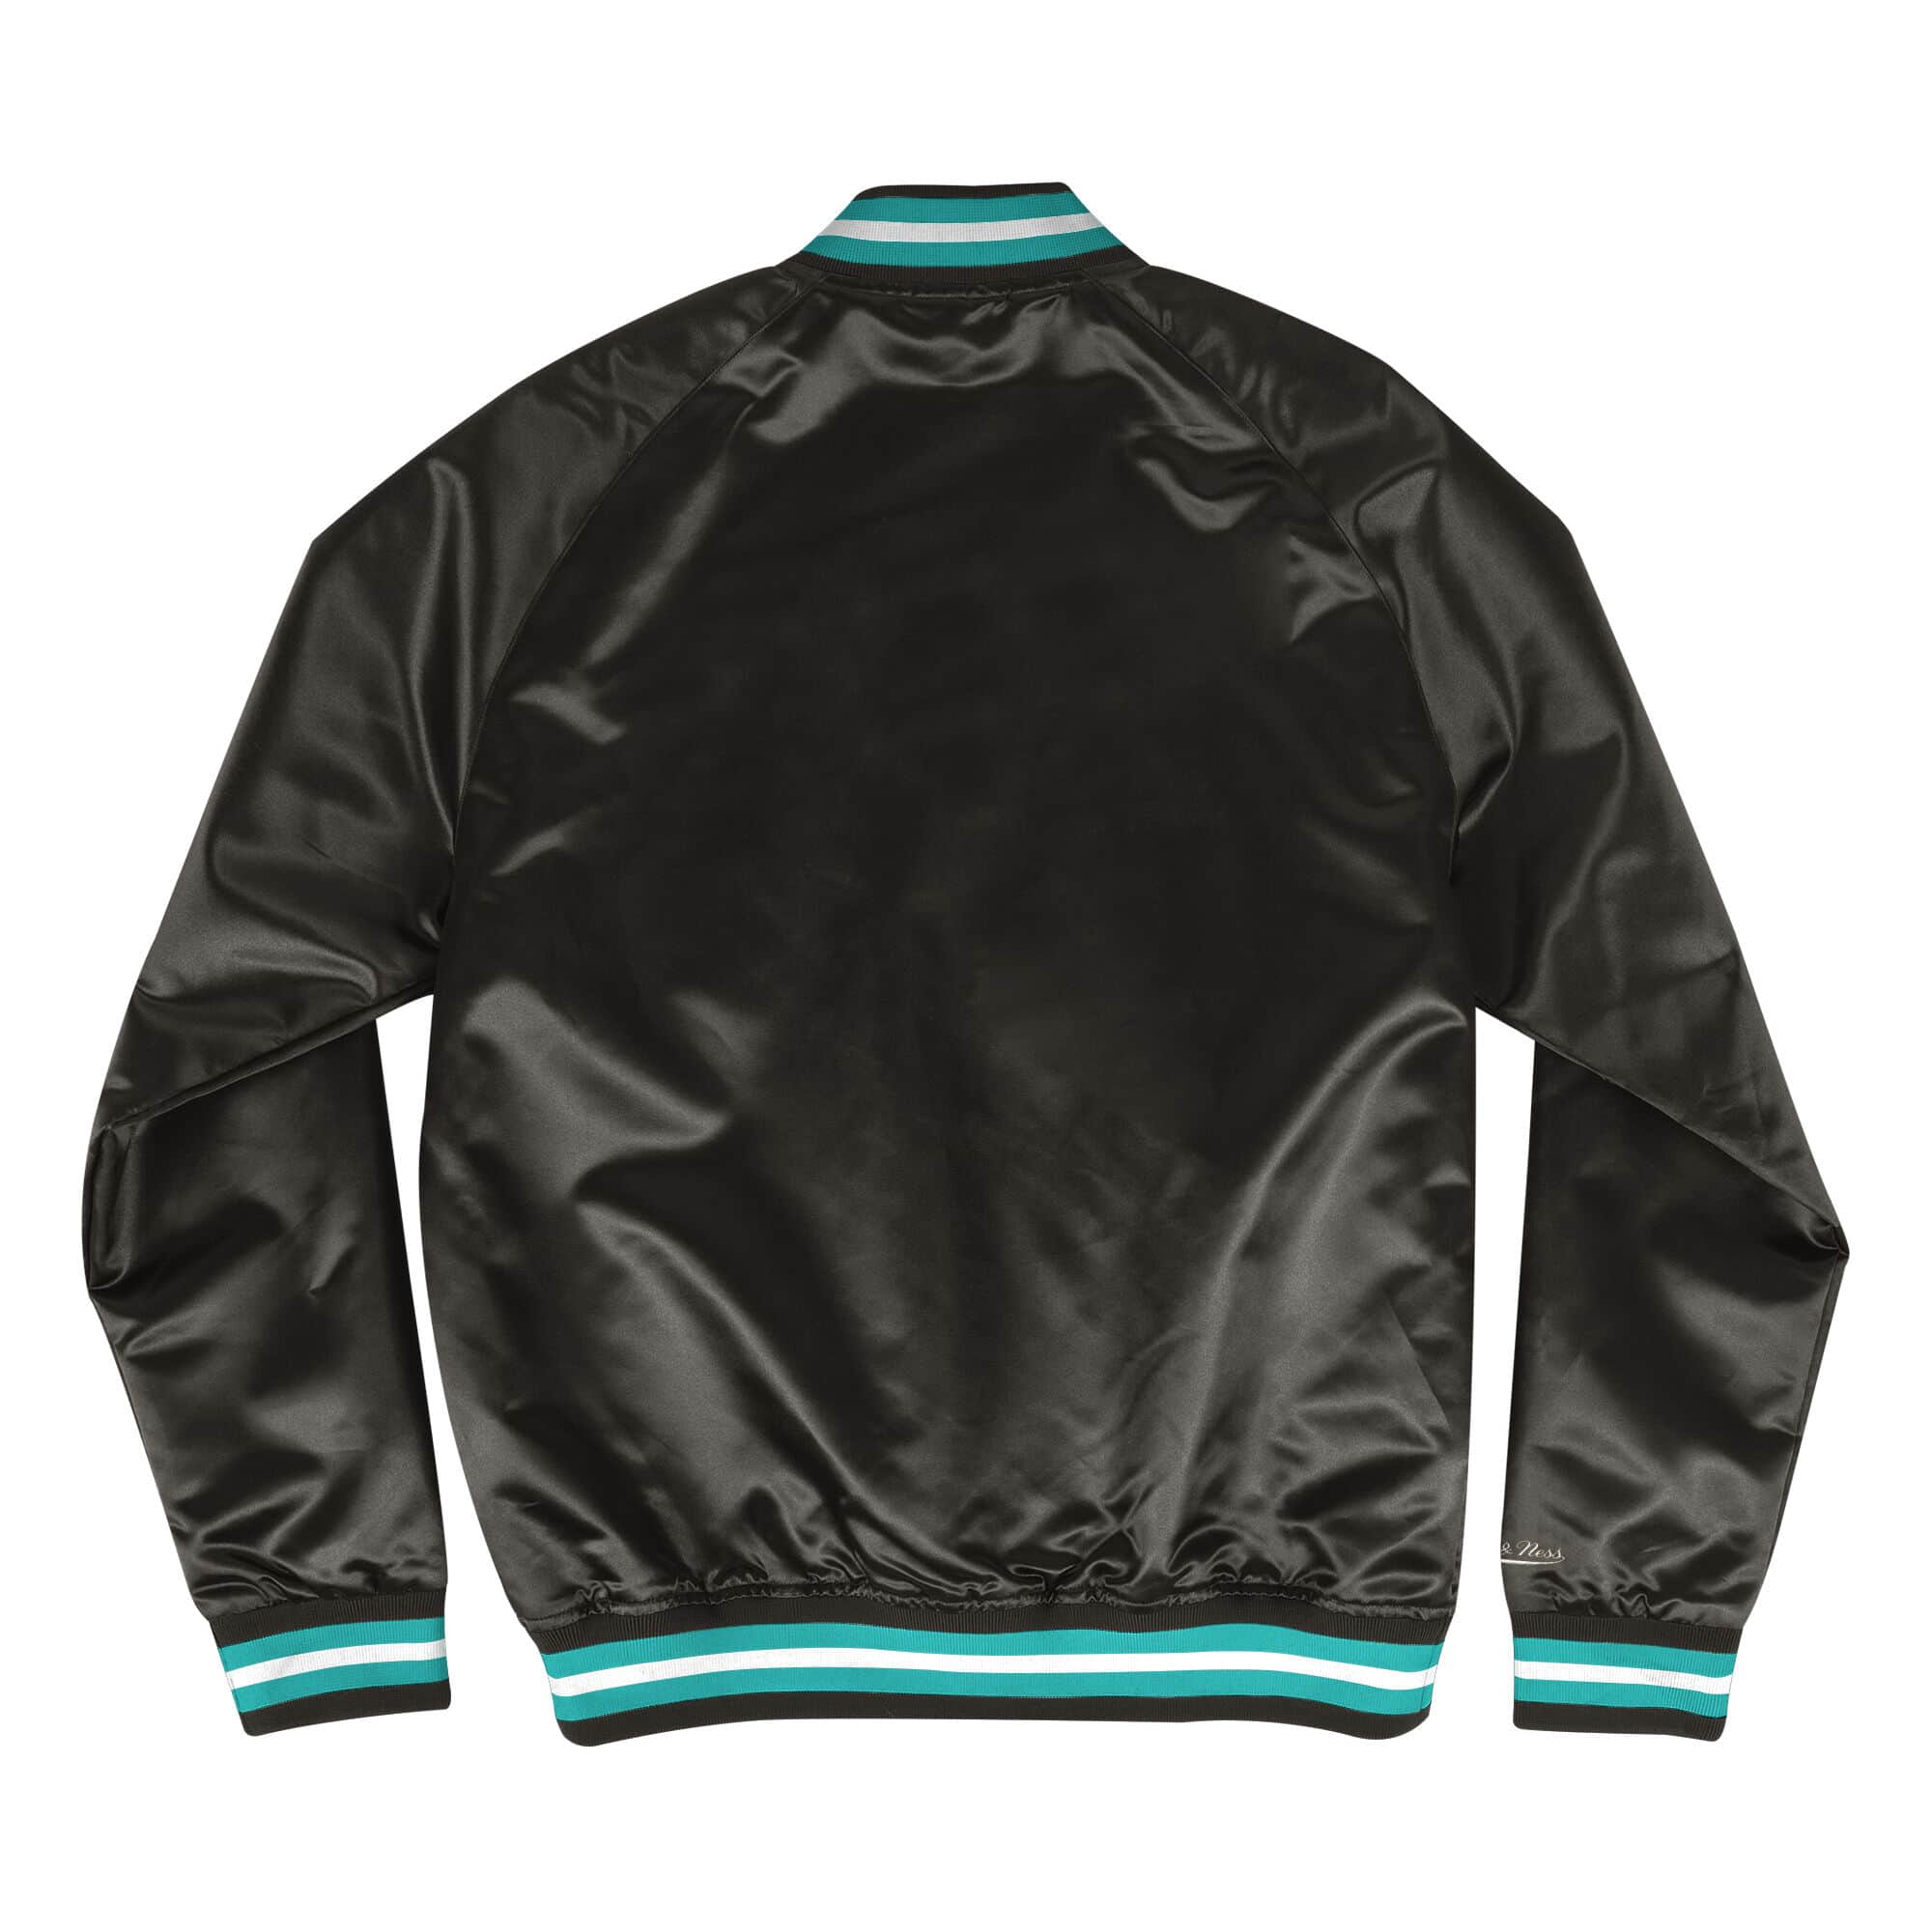 Mitchell & Ness Vancouver Grizzlies Black Satin Light Jacket